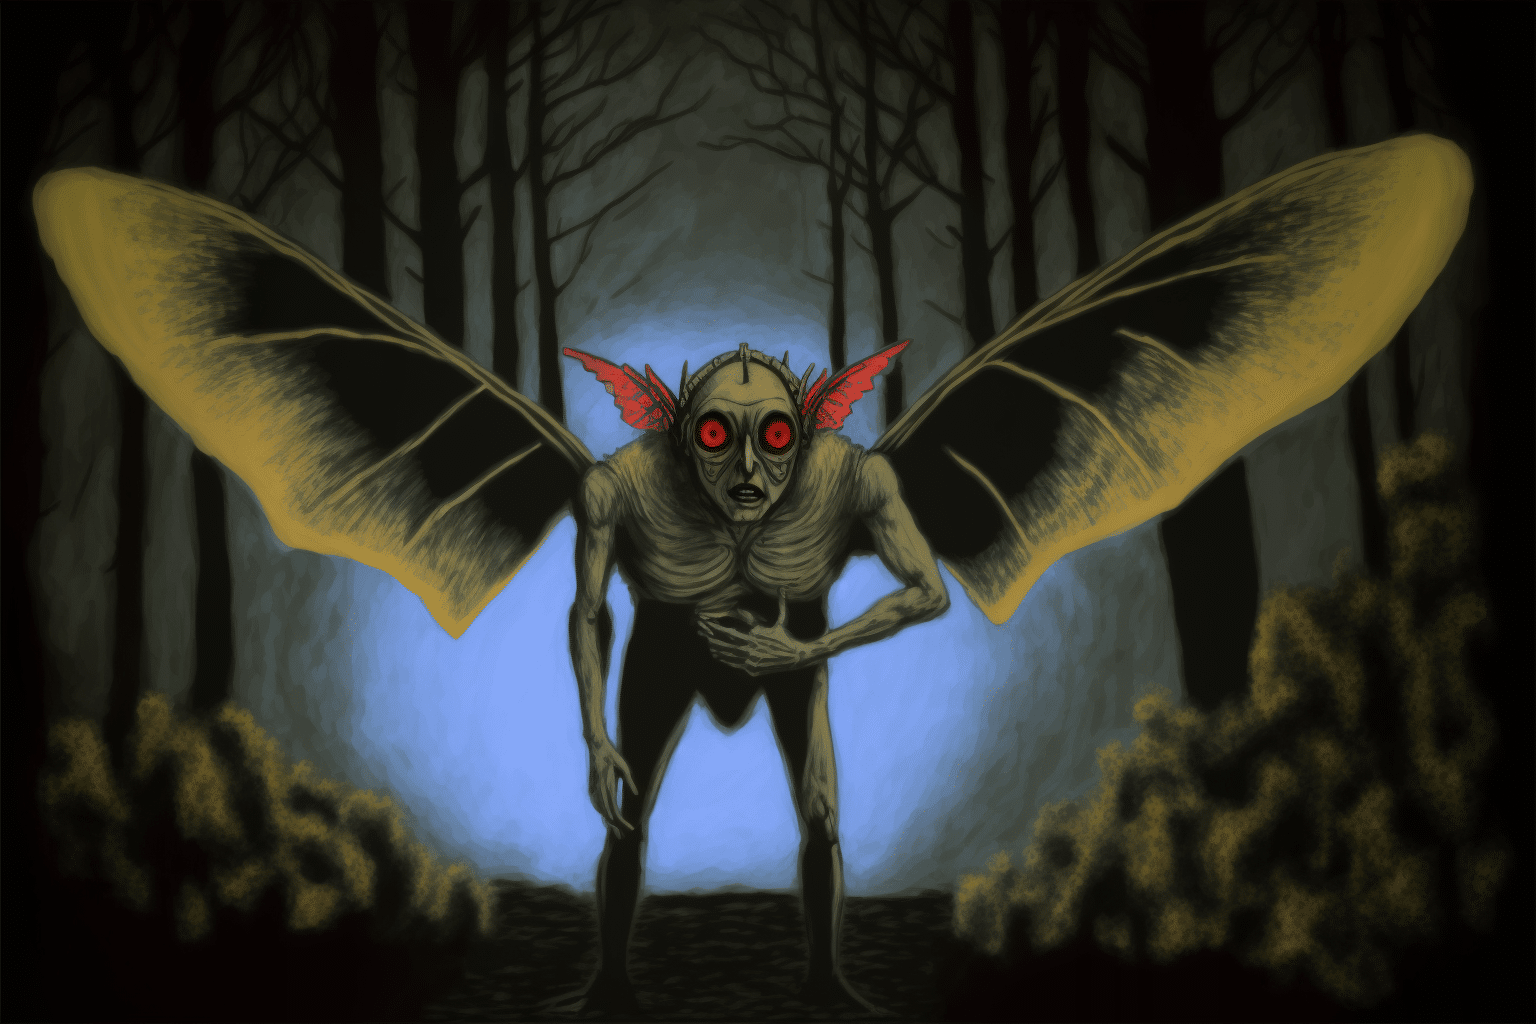 Mothman: conheça a lenda do Homem-Mariposa